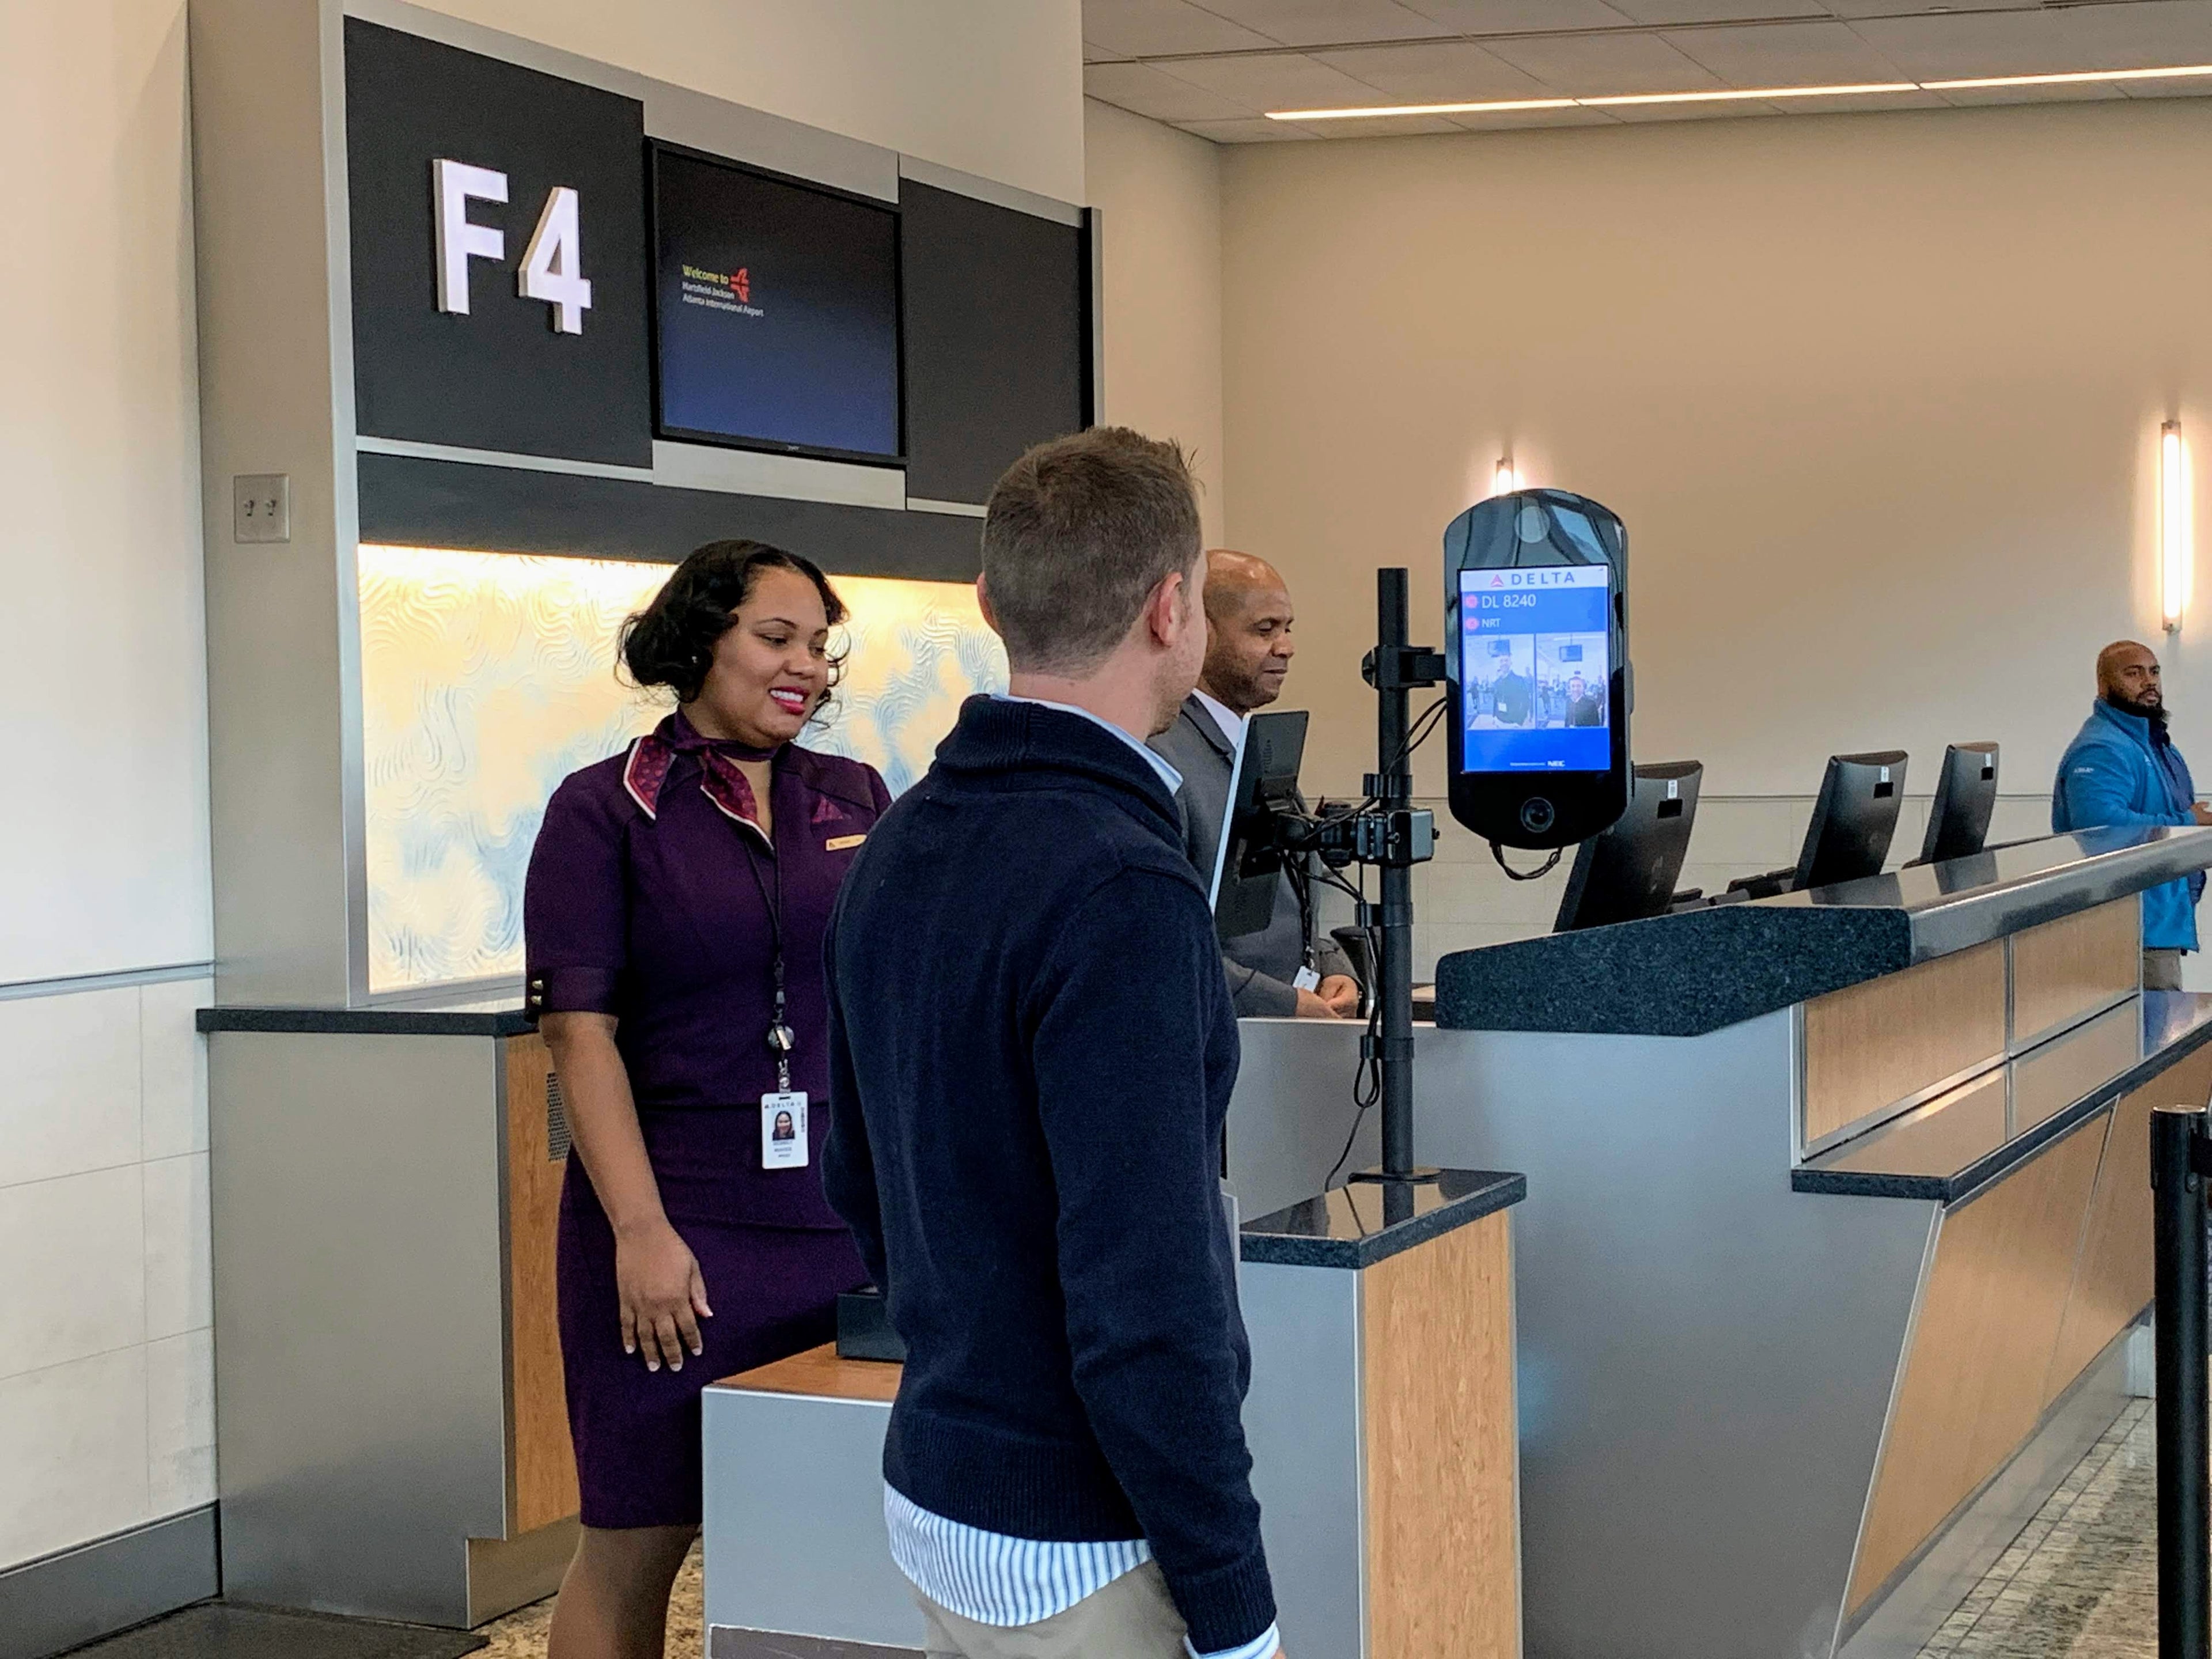 Delta ATL Terminal F Biometric Boarding - F4_1